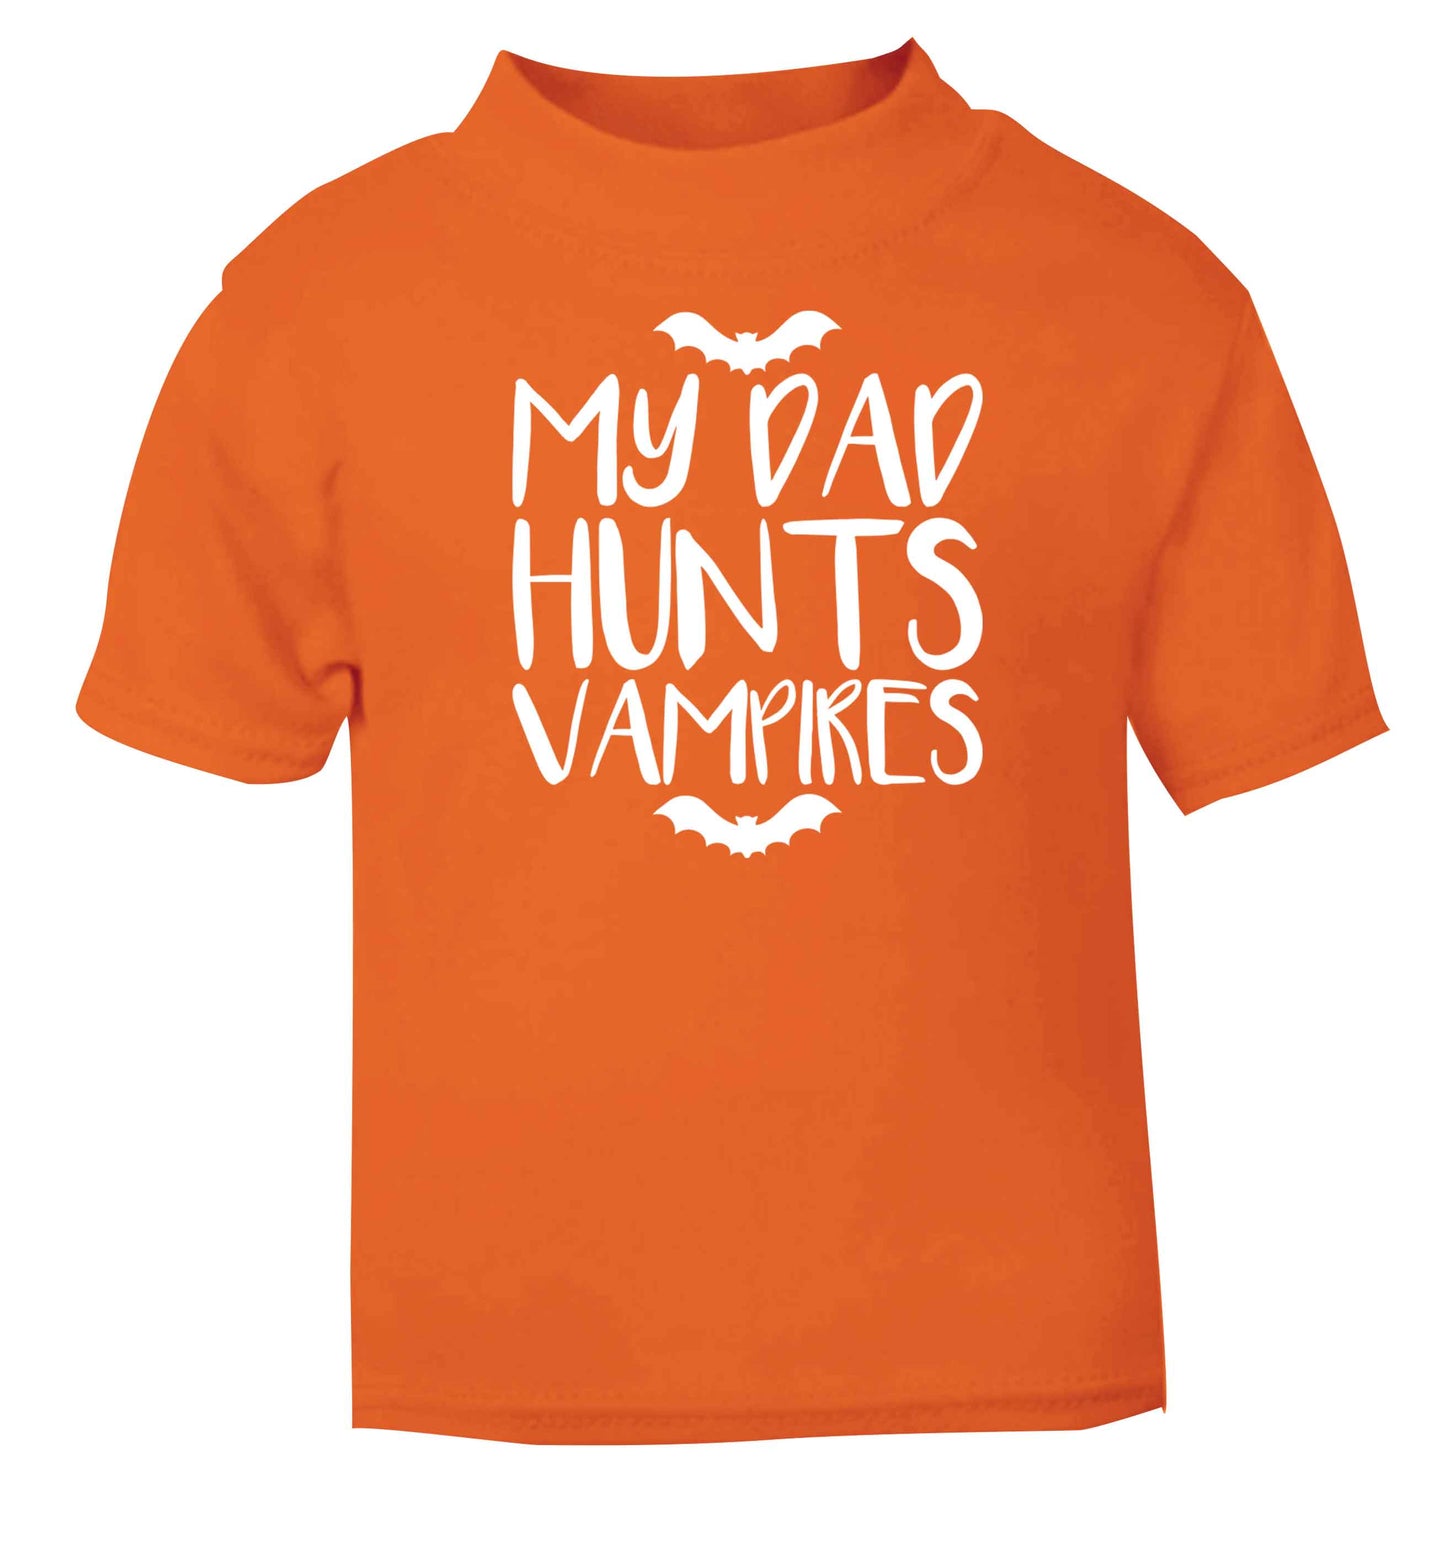 My dad hunts vampires orange baby toddler Tshirt 2 Years